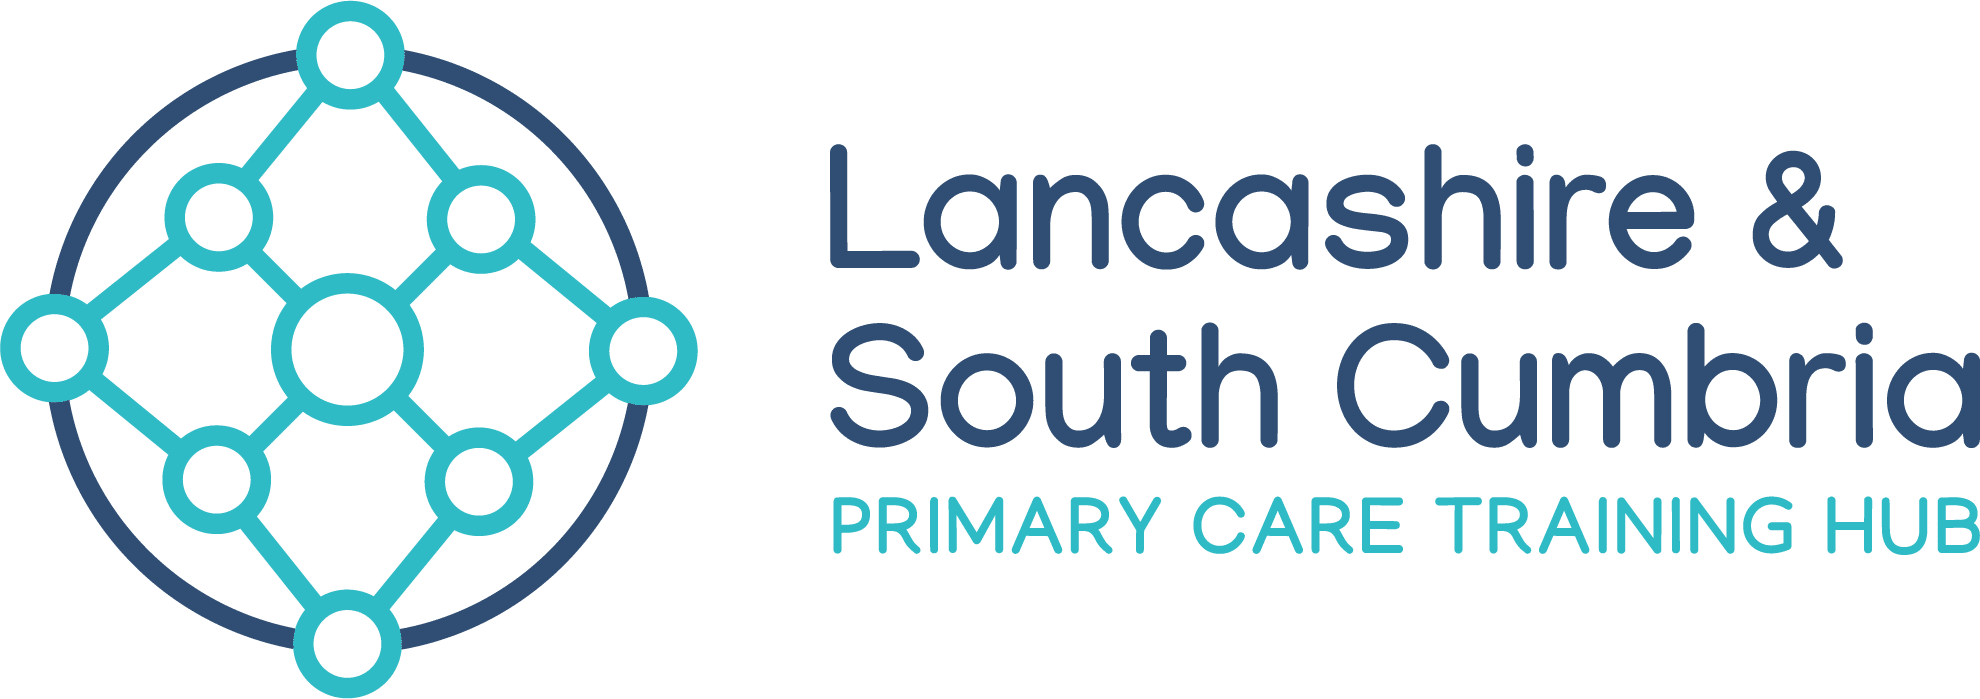 Lancashire and South Cumbria Training Hub